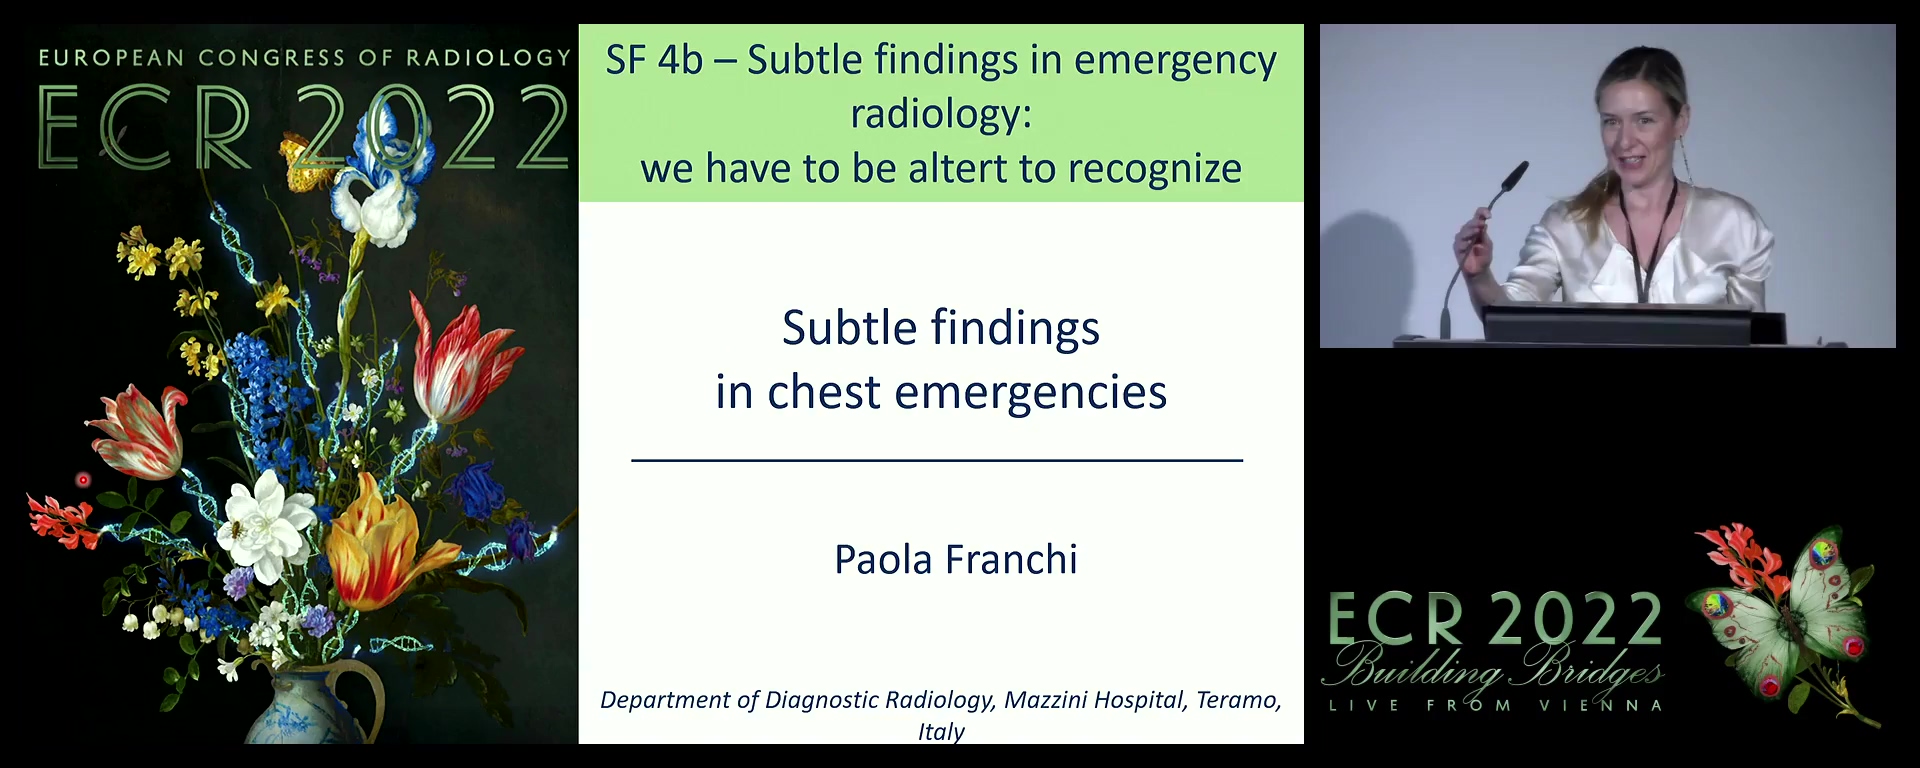 Subtle imaging findings in chest emergencies